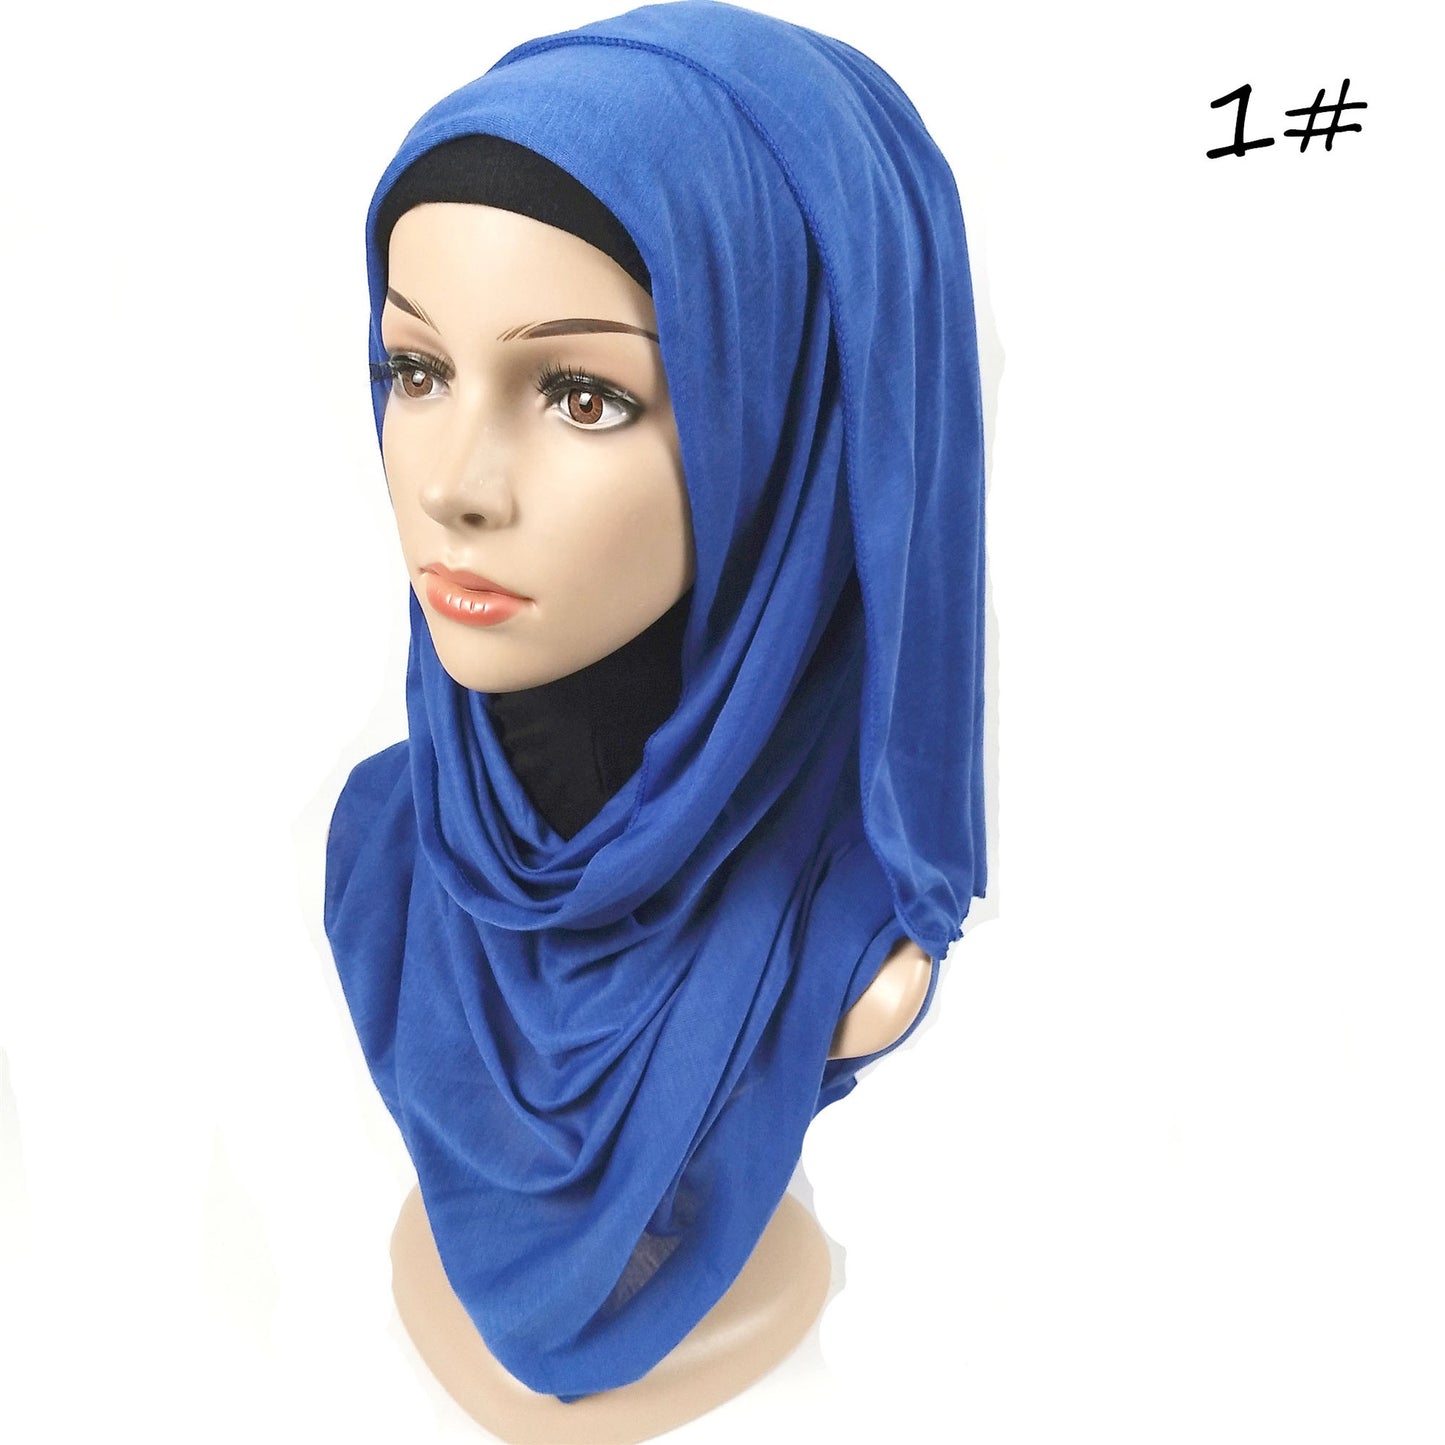 Islamic headscarf 